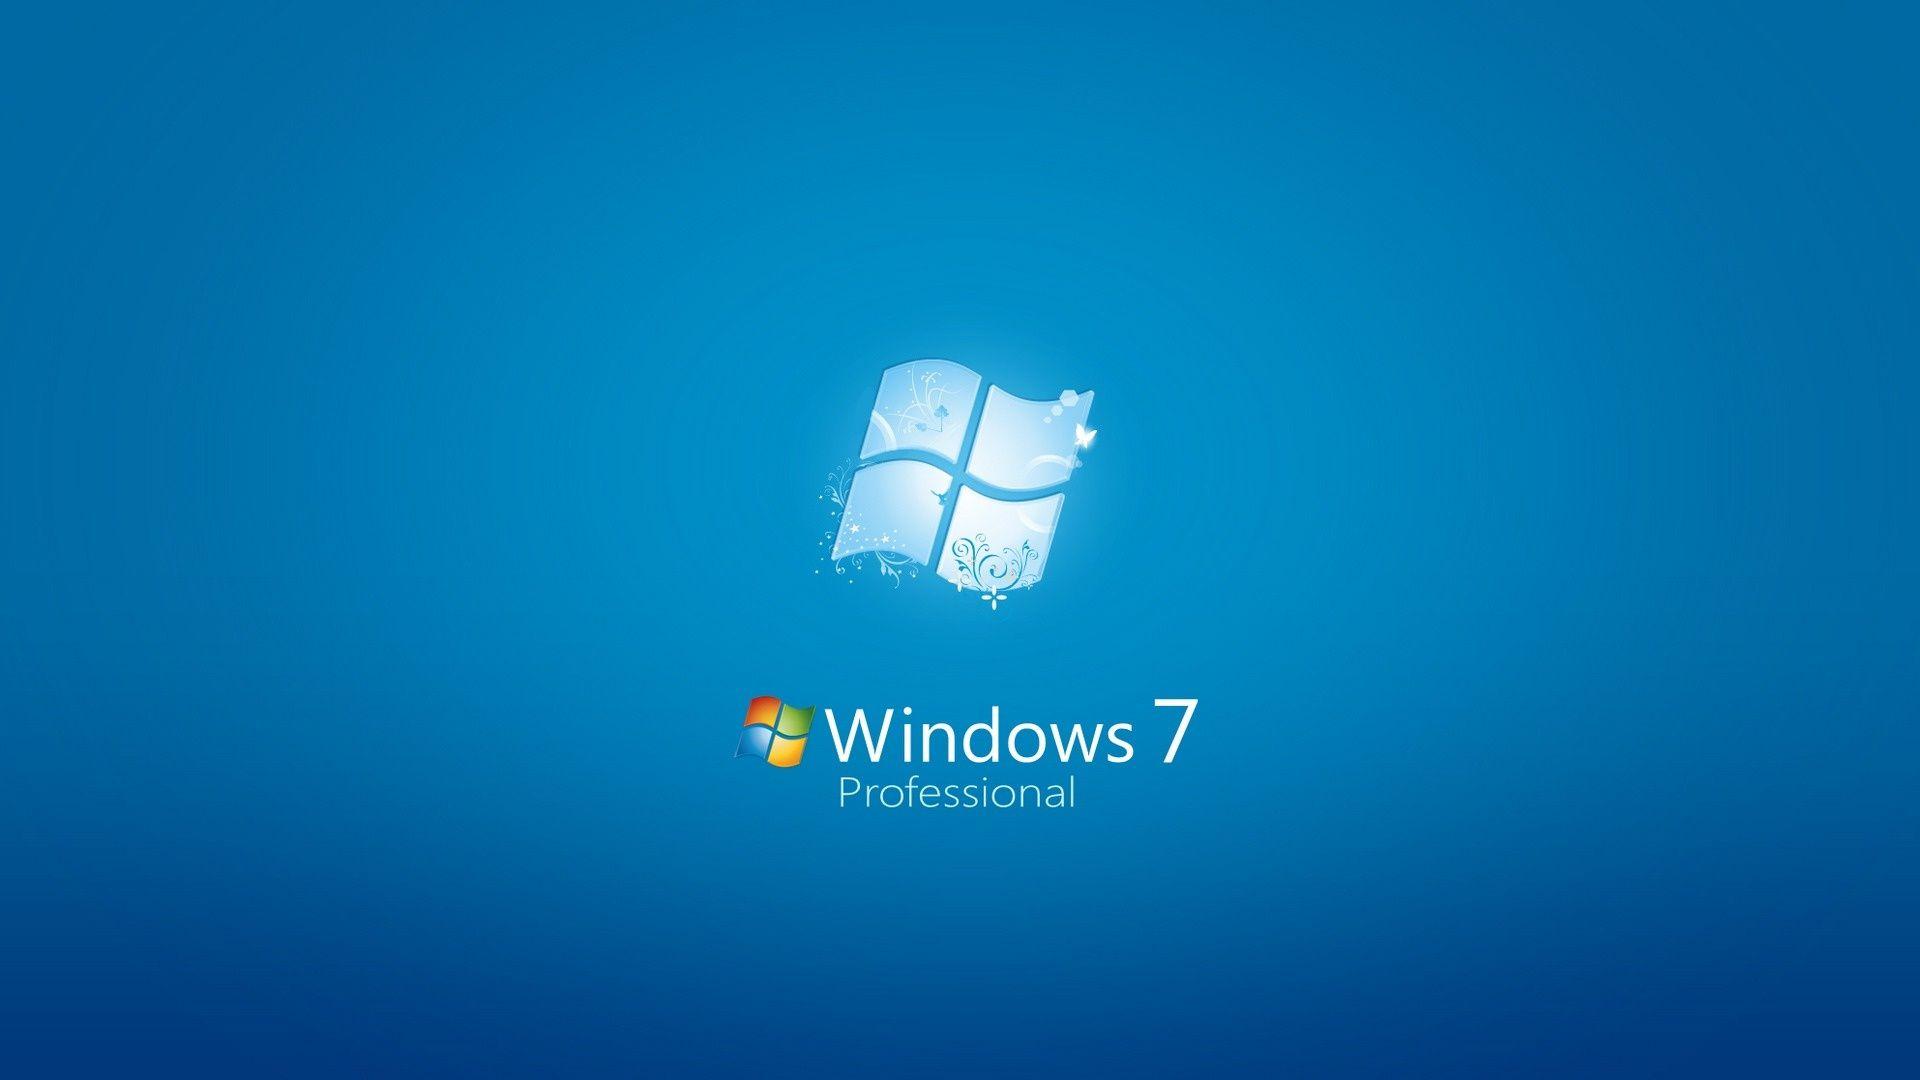 Windows 7 HD Wallpaper. fbpapa